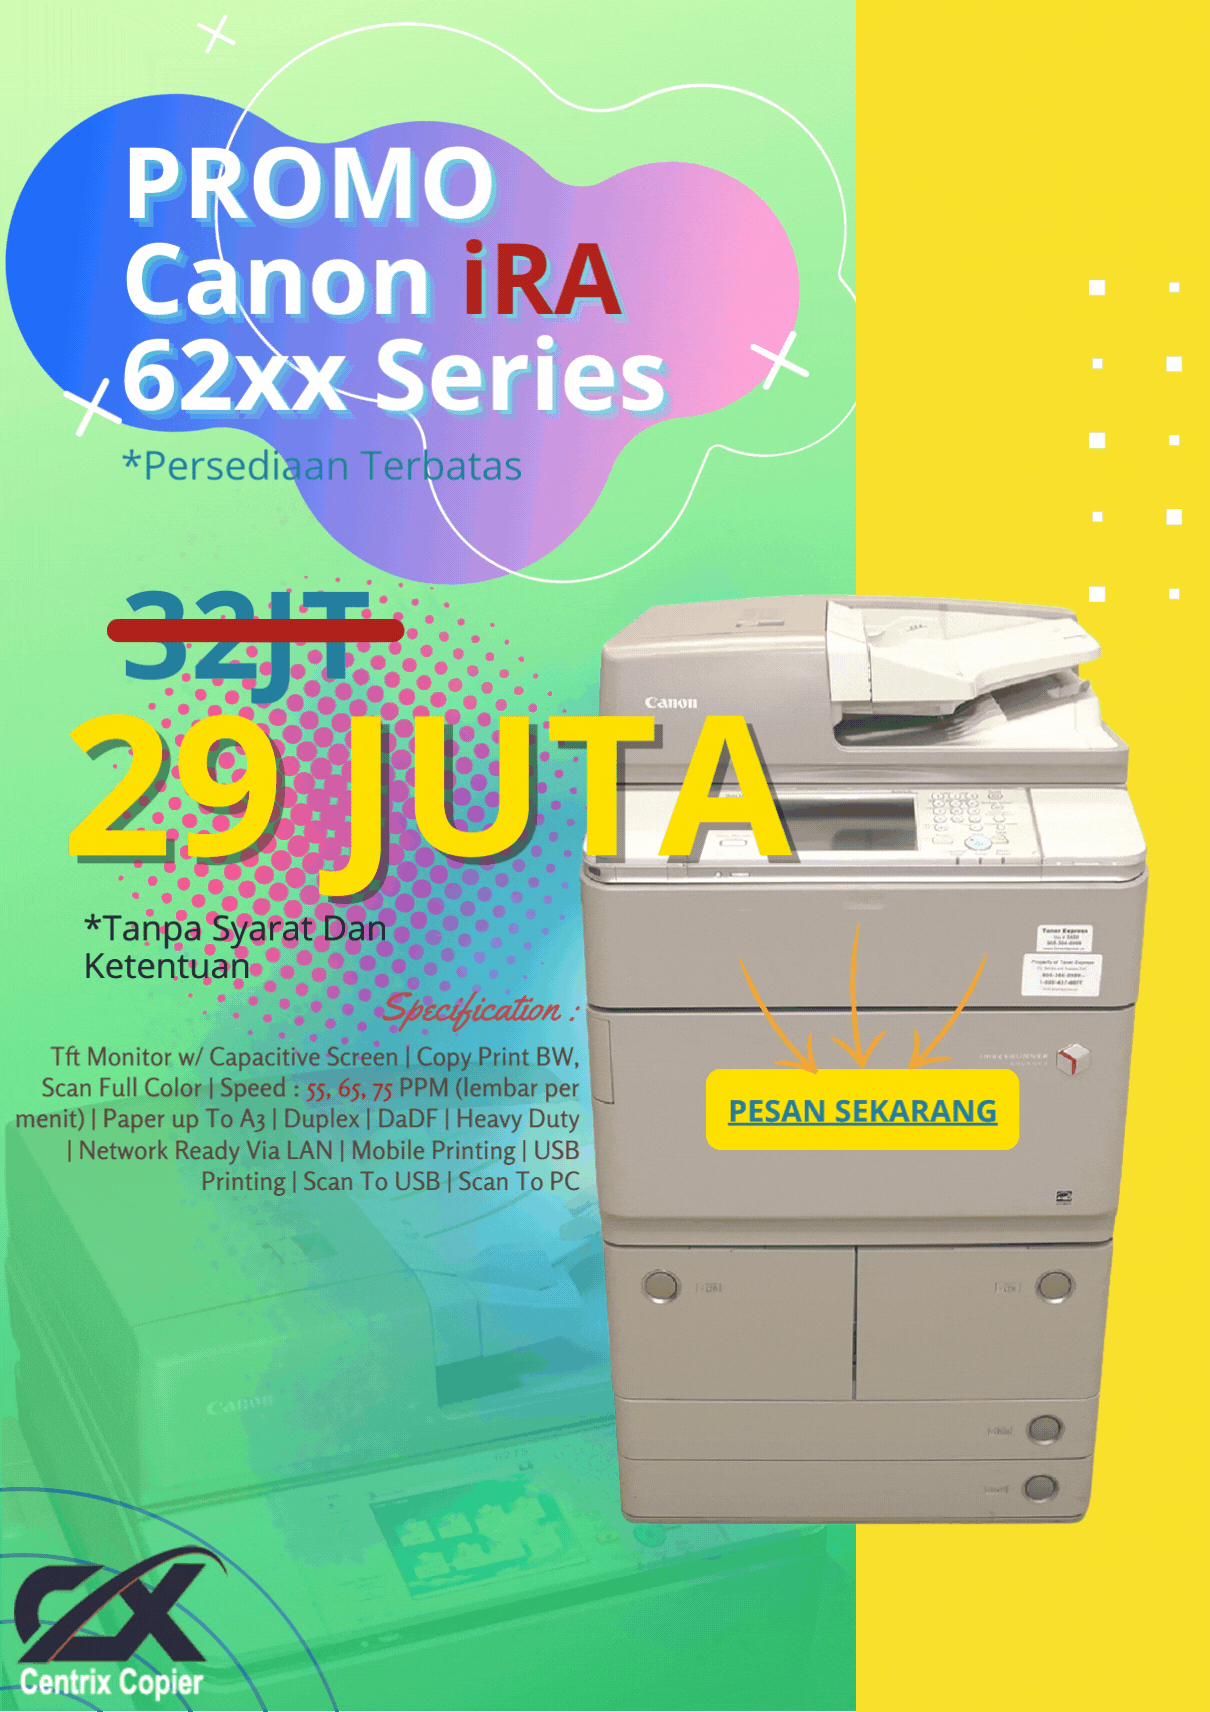 Promo Mesin Fotocopy Canon iRA 62xx Series